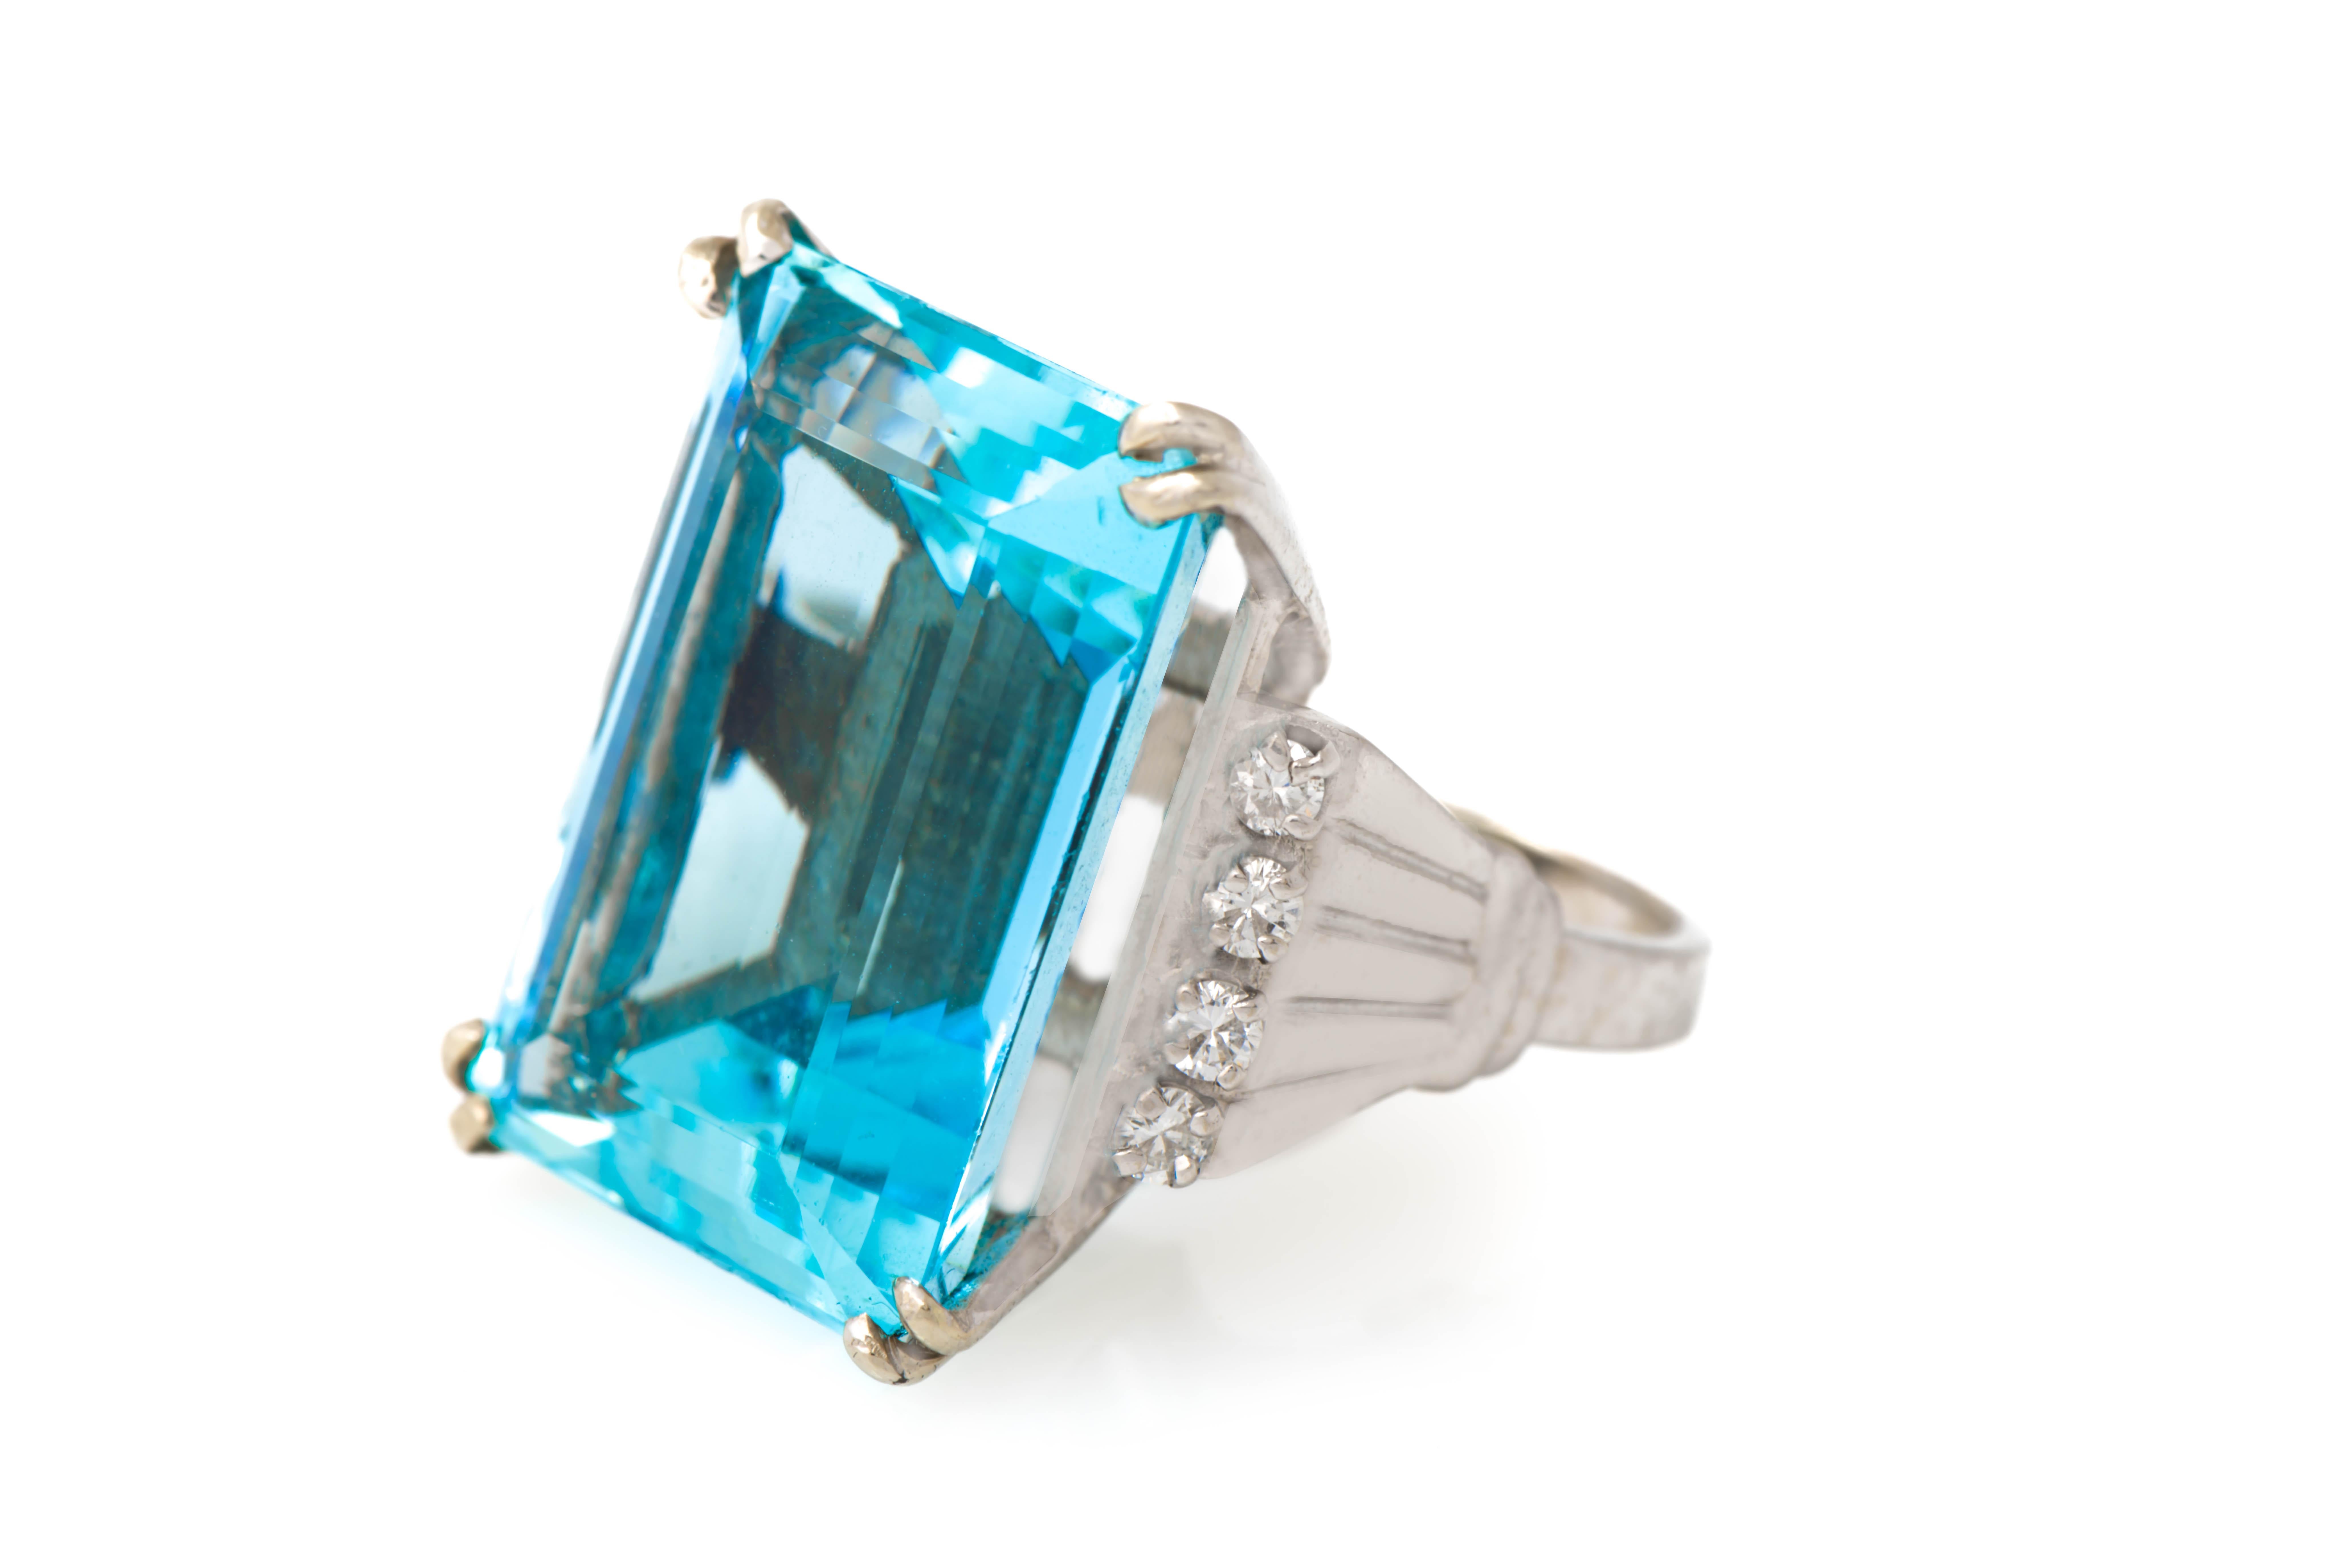 Large Aquamarine & Diamond Ring 

1 emerald cut aquamarine surrounded by 8 round cut diamonds set in 14k white gold.

Ring Size: 6.25

Resizable free of charge 